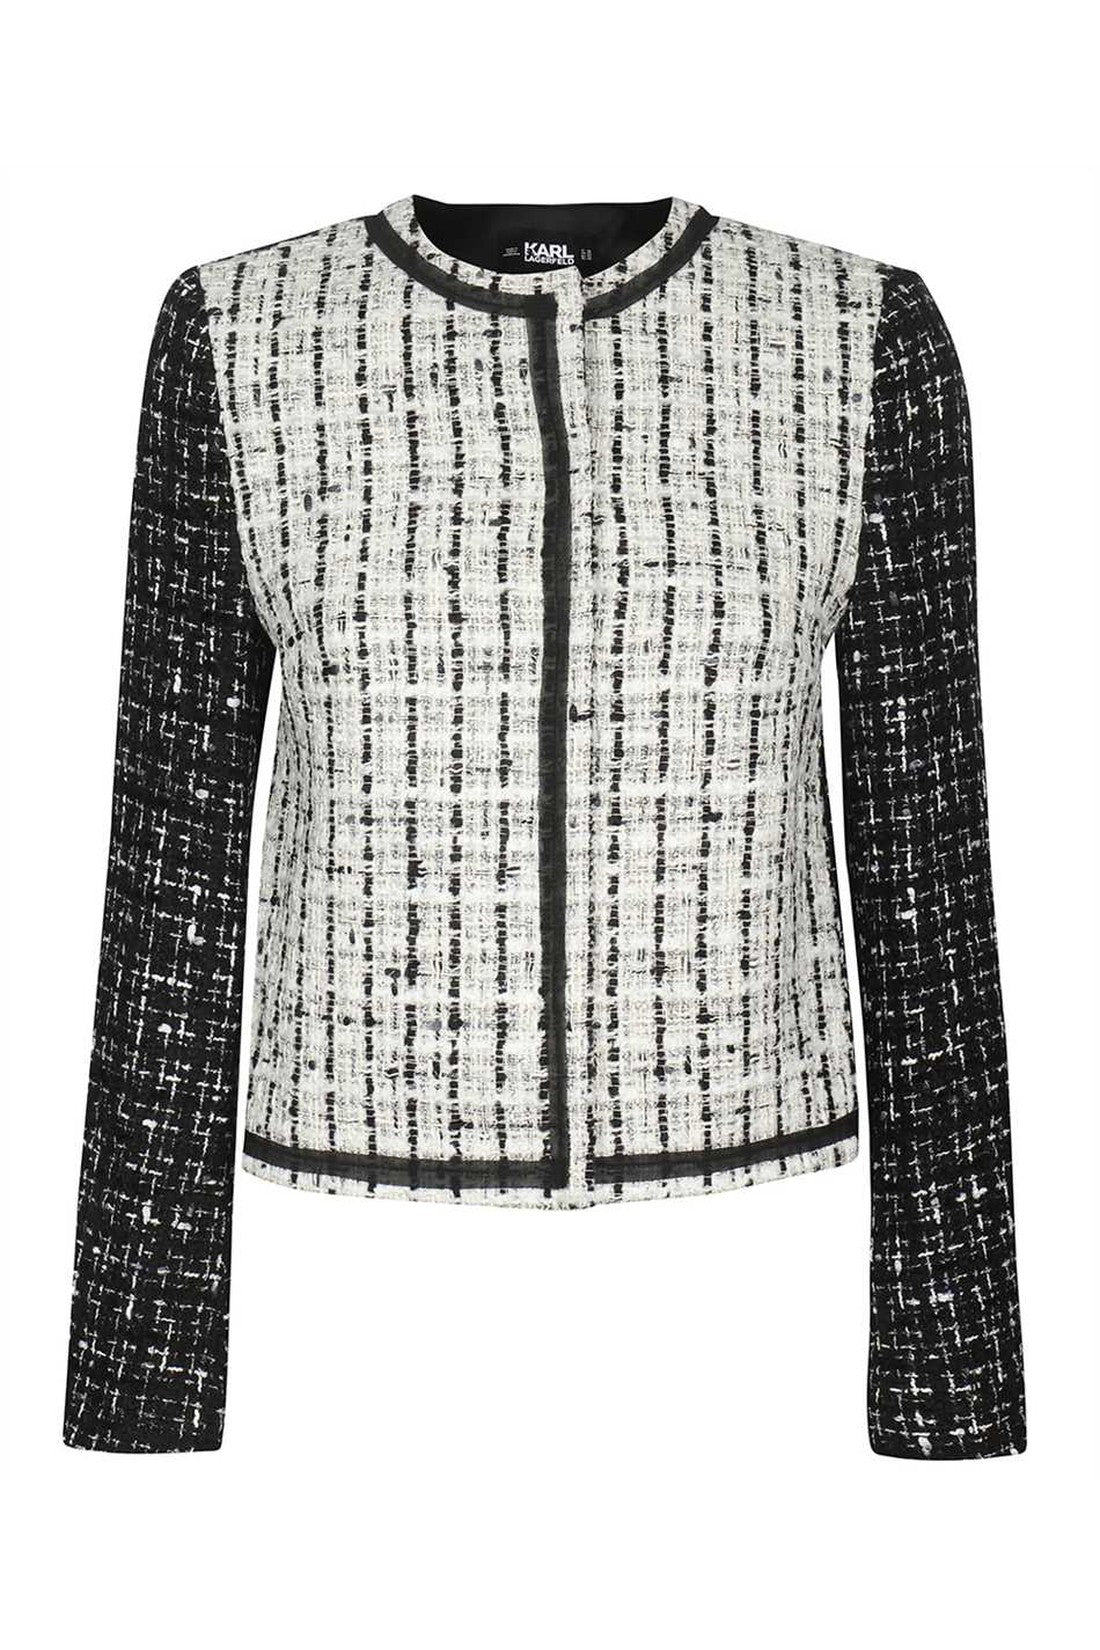 Tweed jacket-Karl Lagerfeld-OUTLET-SALE-38-ARCHIVIST